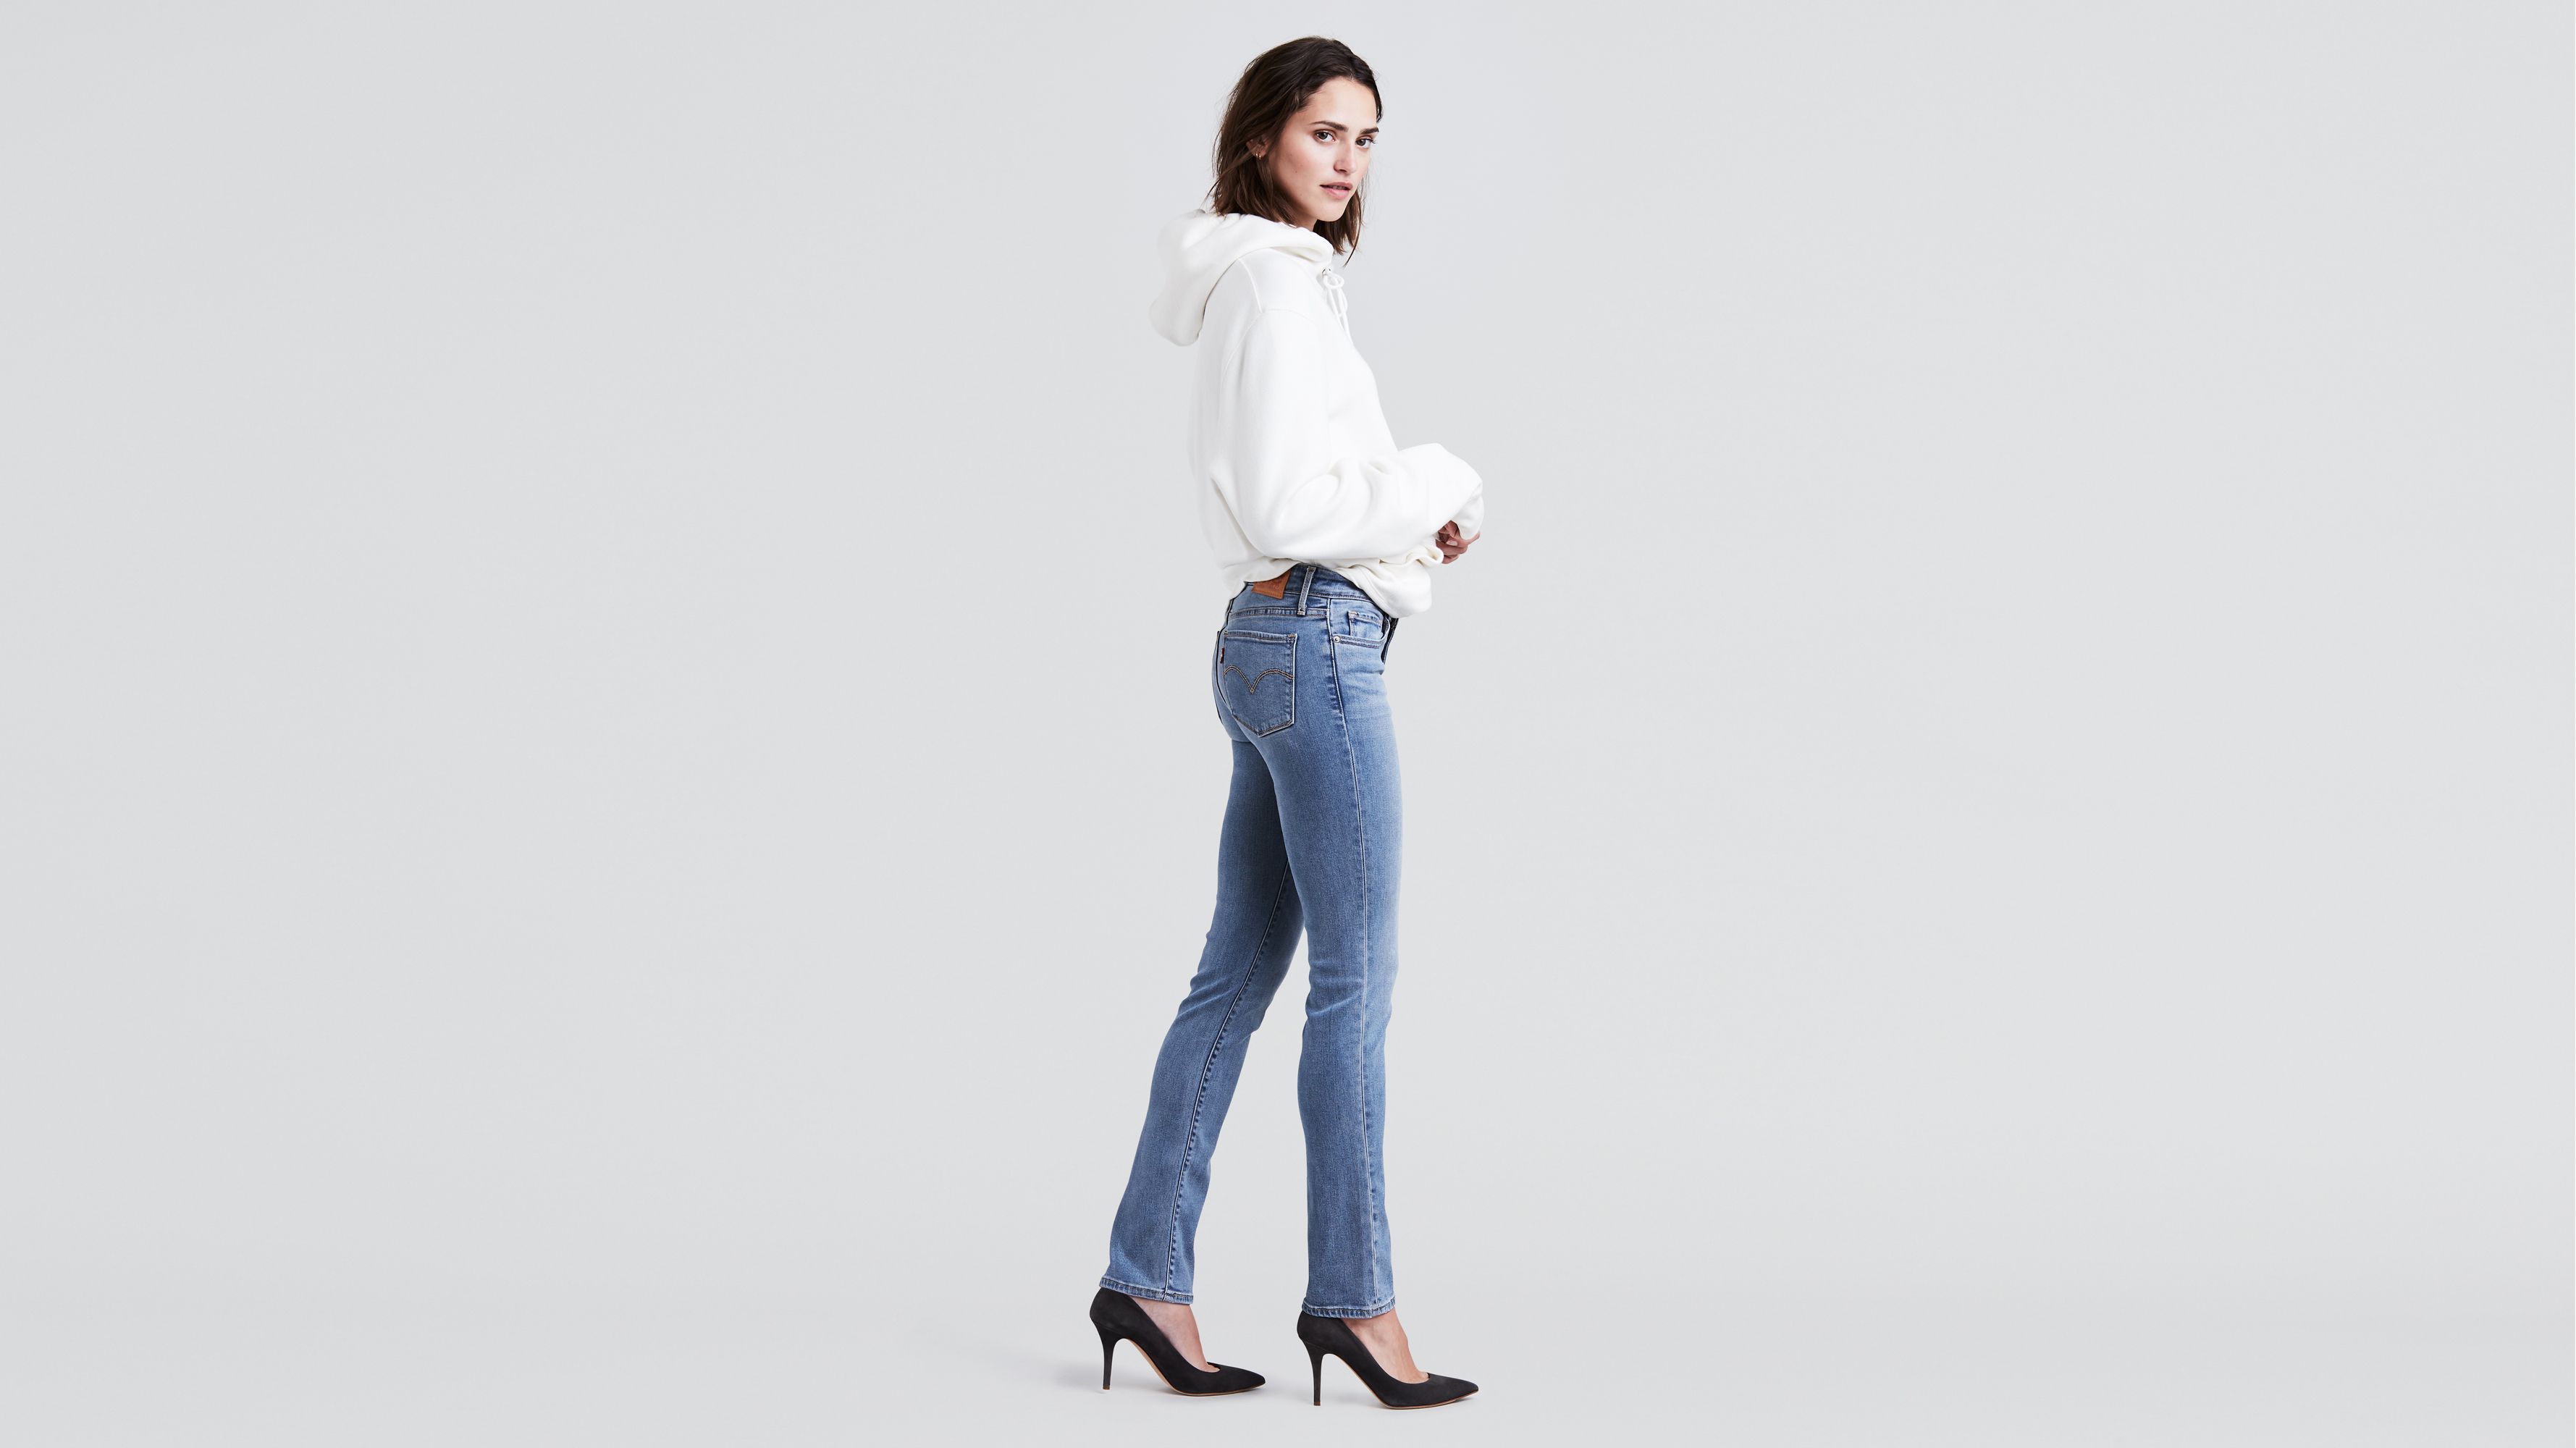 712 Slim Women's Jeans - Light Wash | Levi's® US